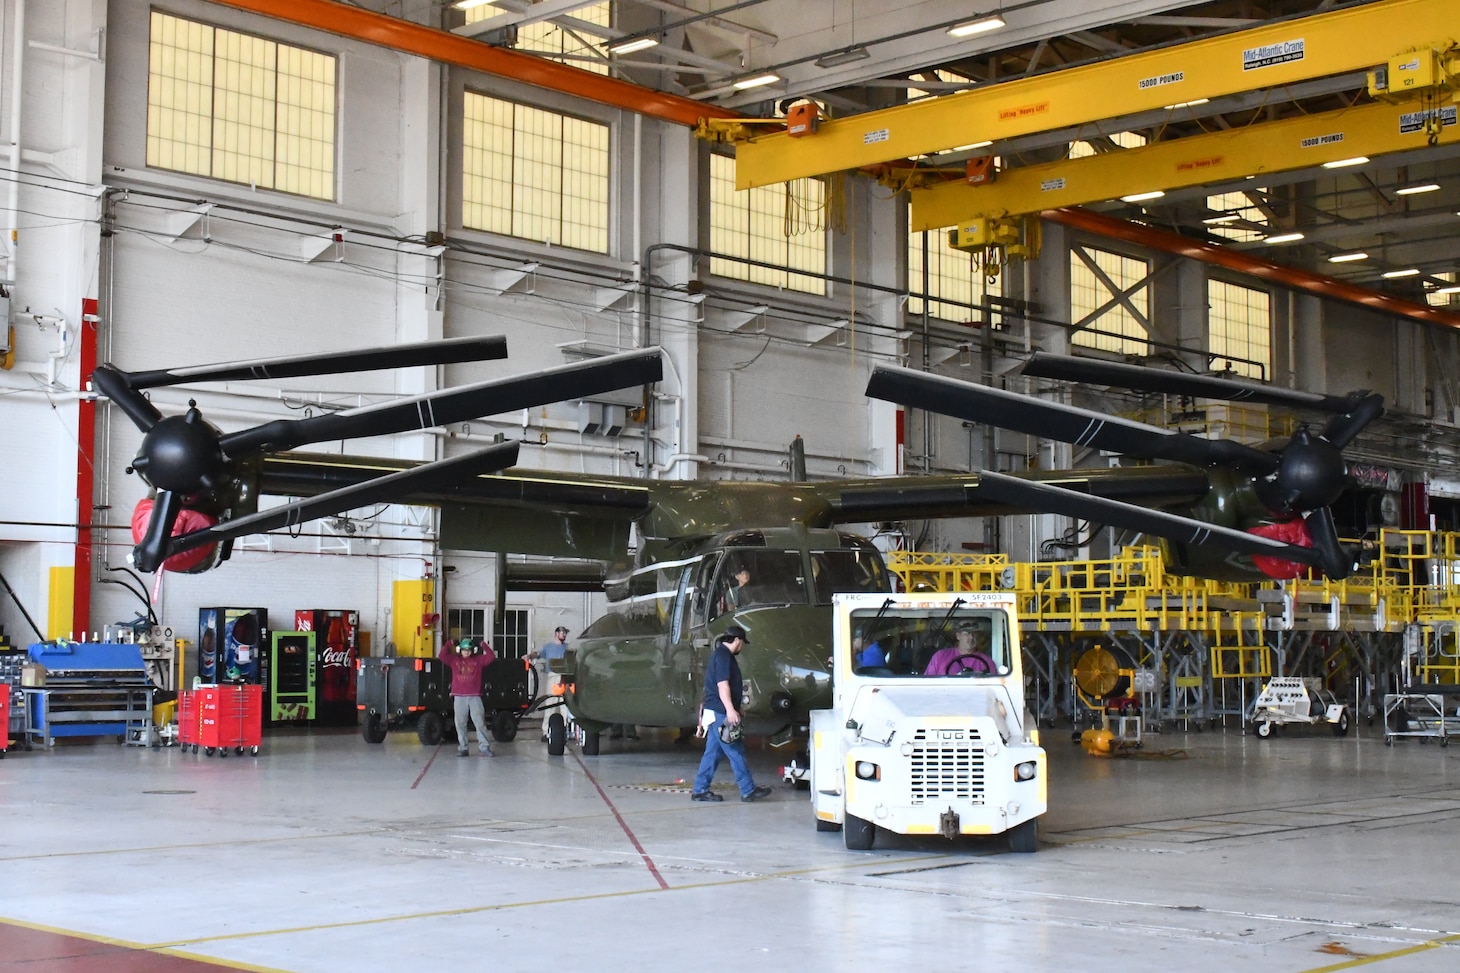 A tug tows a V-22 aircraft out of a hangar.